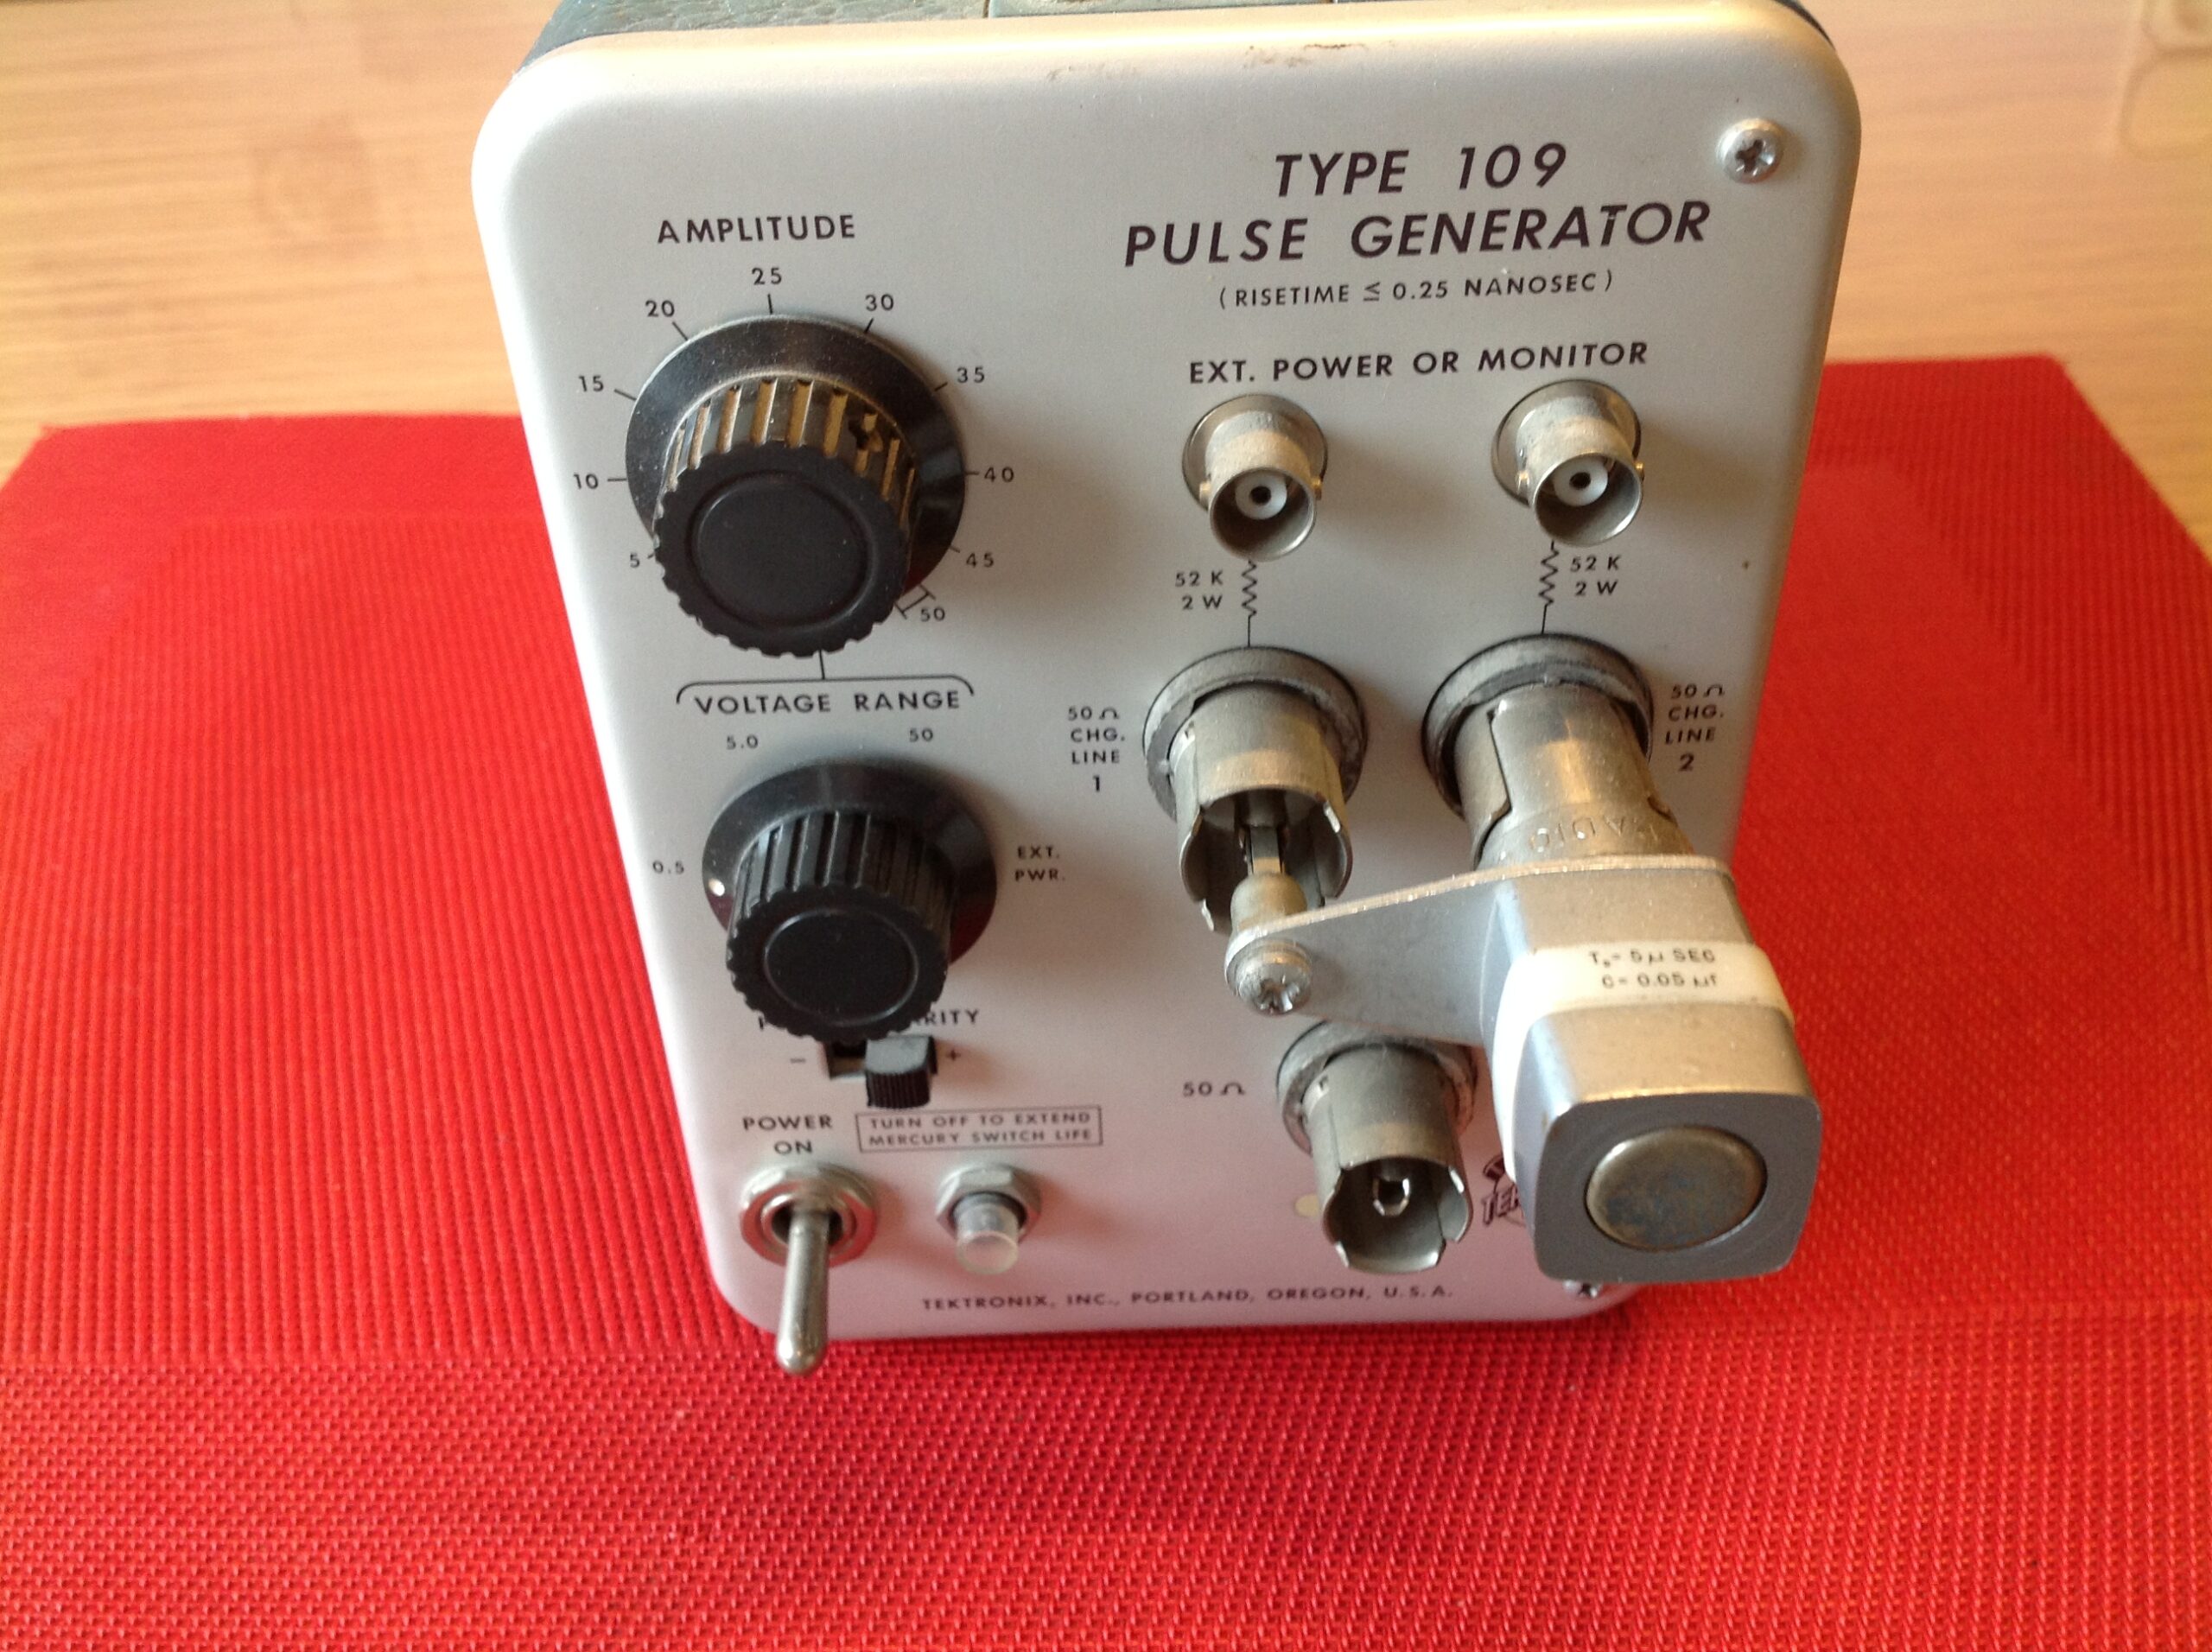 Tektronix Pulse Generator Type 109